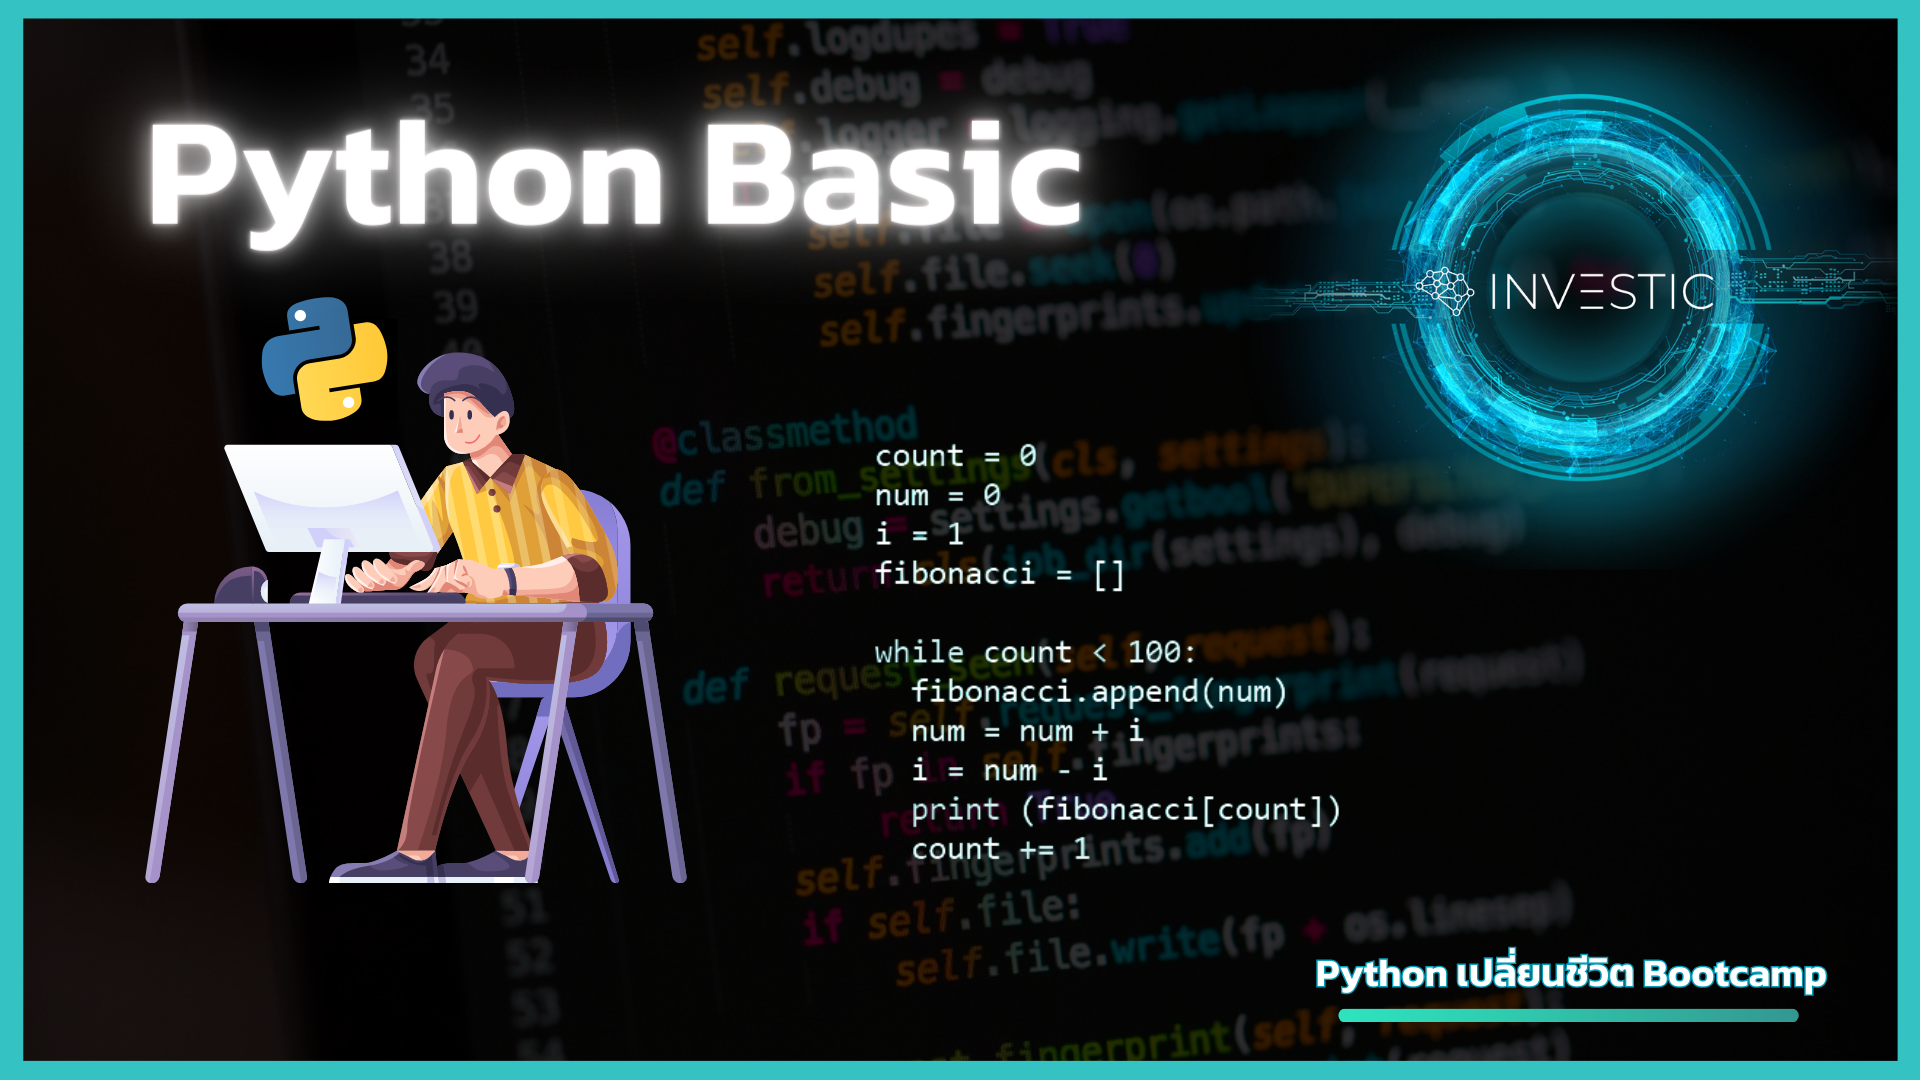 Python for Technical Analysis